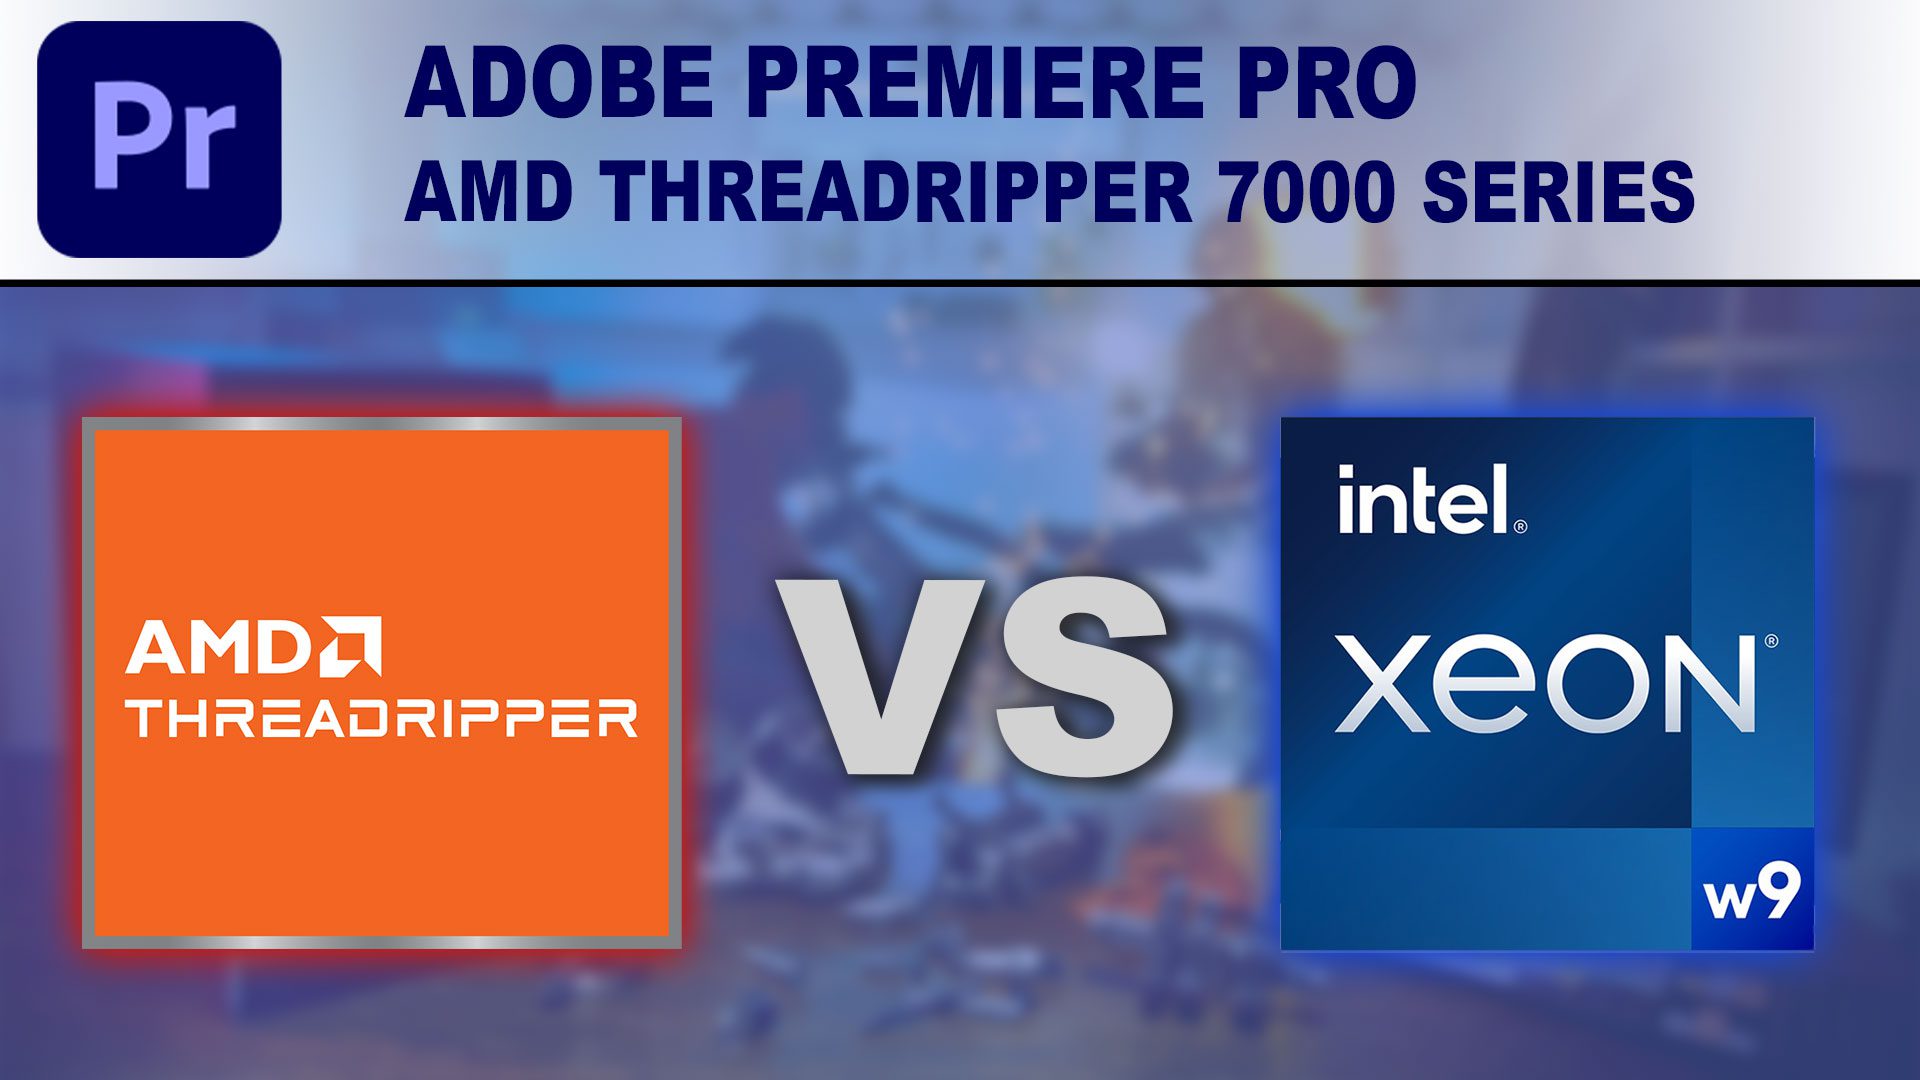 Decorative Image: Premiere Pro - AMD Threadripper vs Intel Xeon